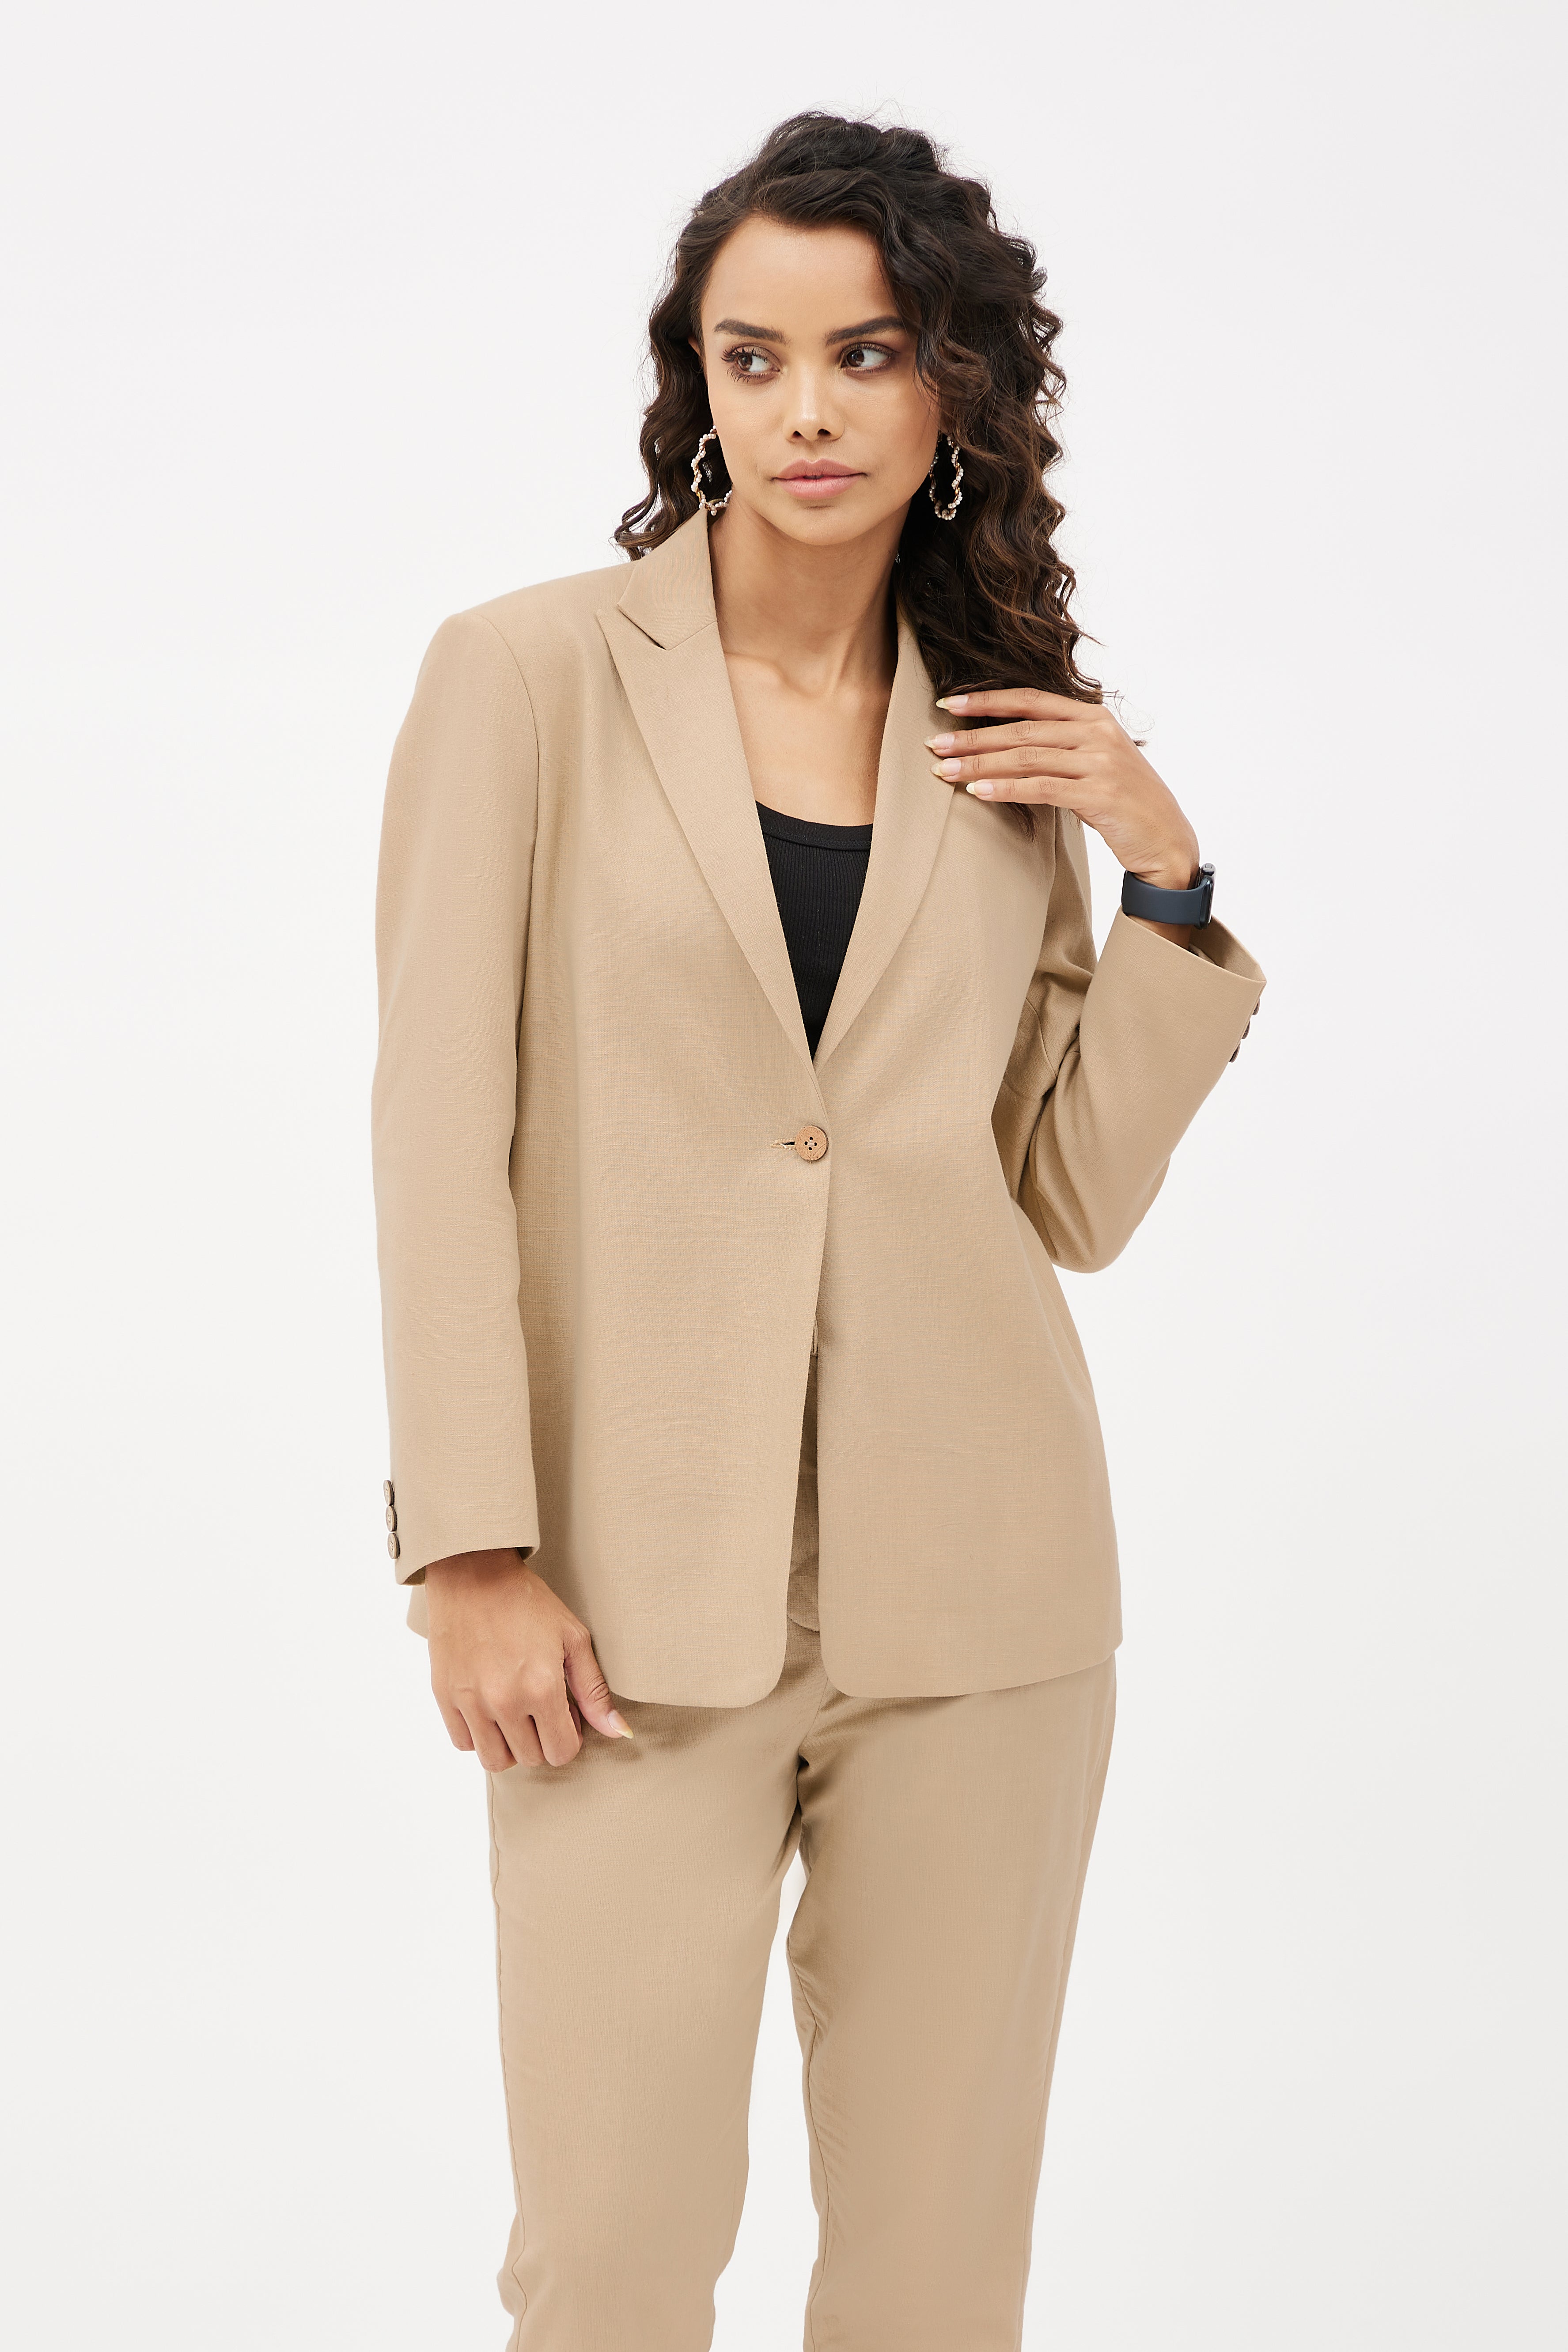 Buy BInfinite White Statement Blazer and Trousers for Women Online  Tata  CLiQ Luxury